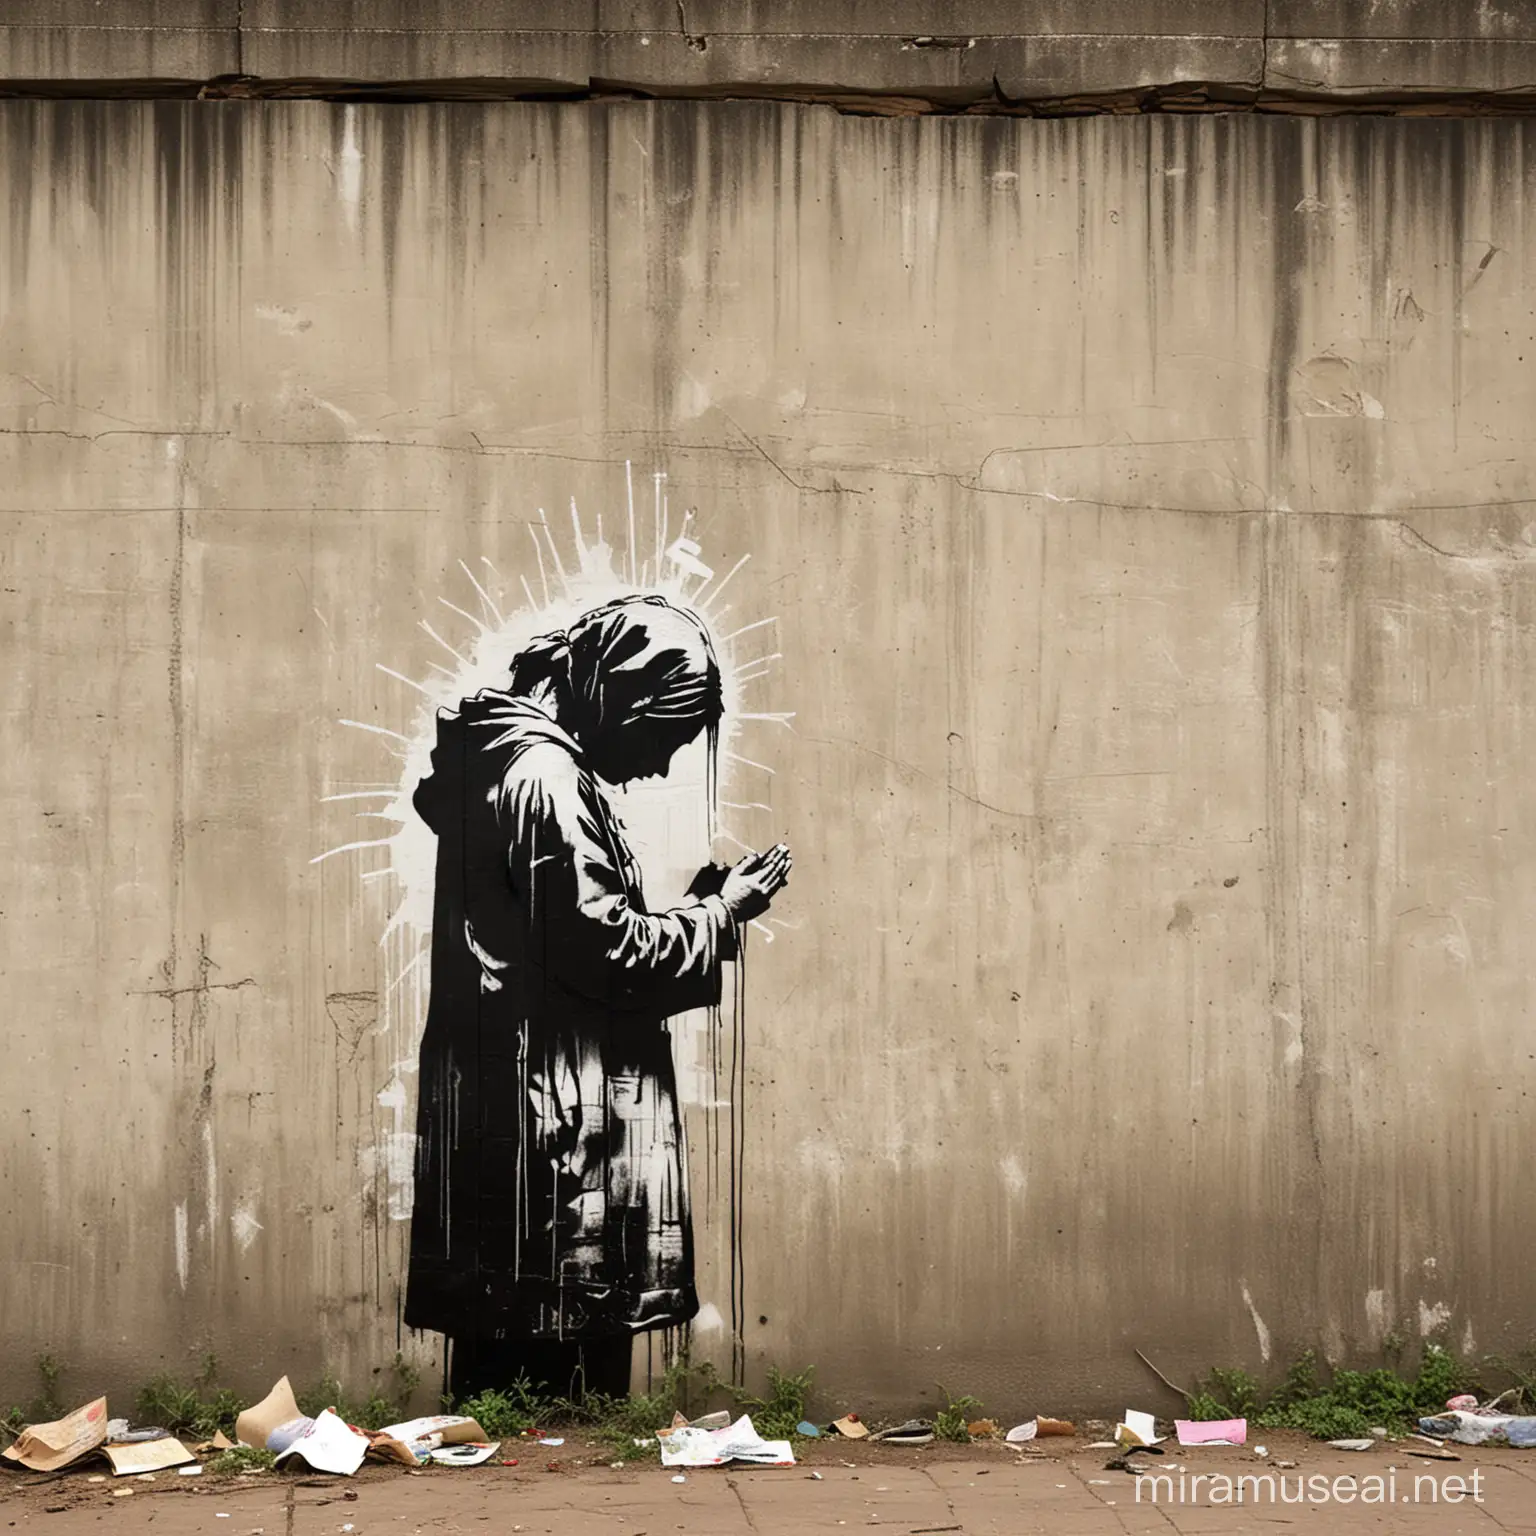 Urban Prayer Graffiti Art in Banksy Style